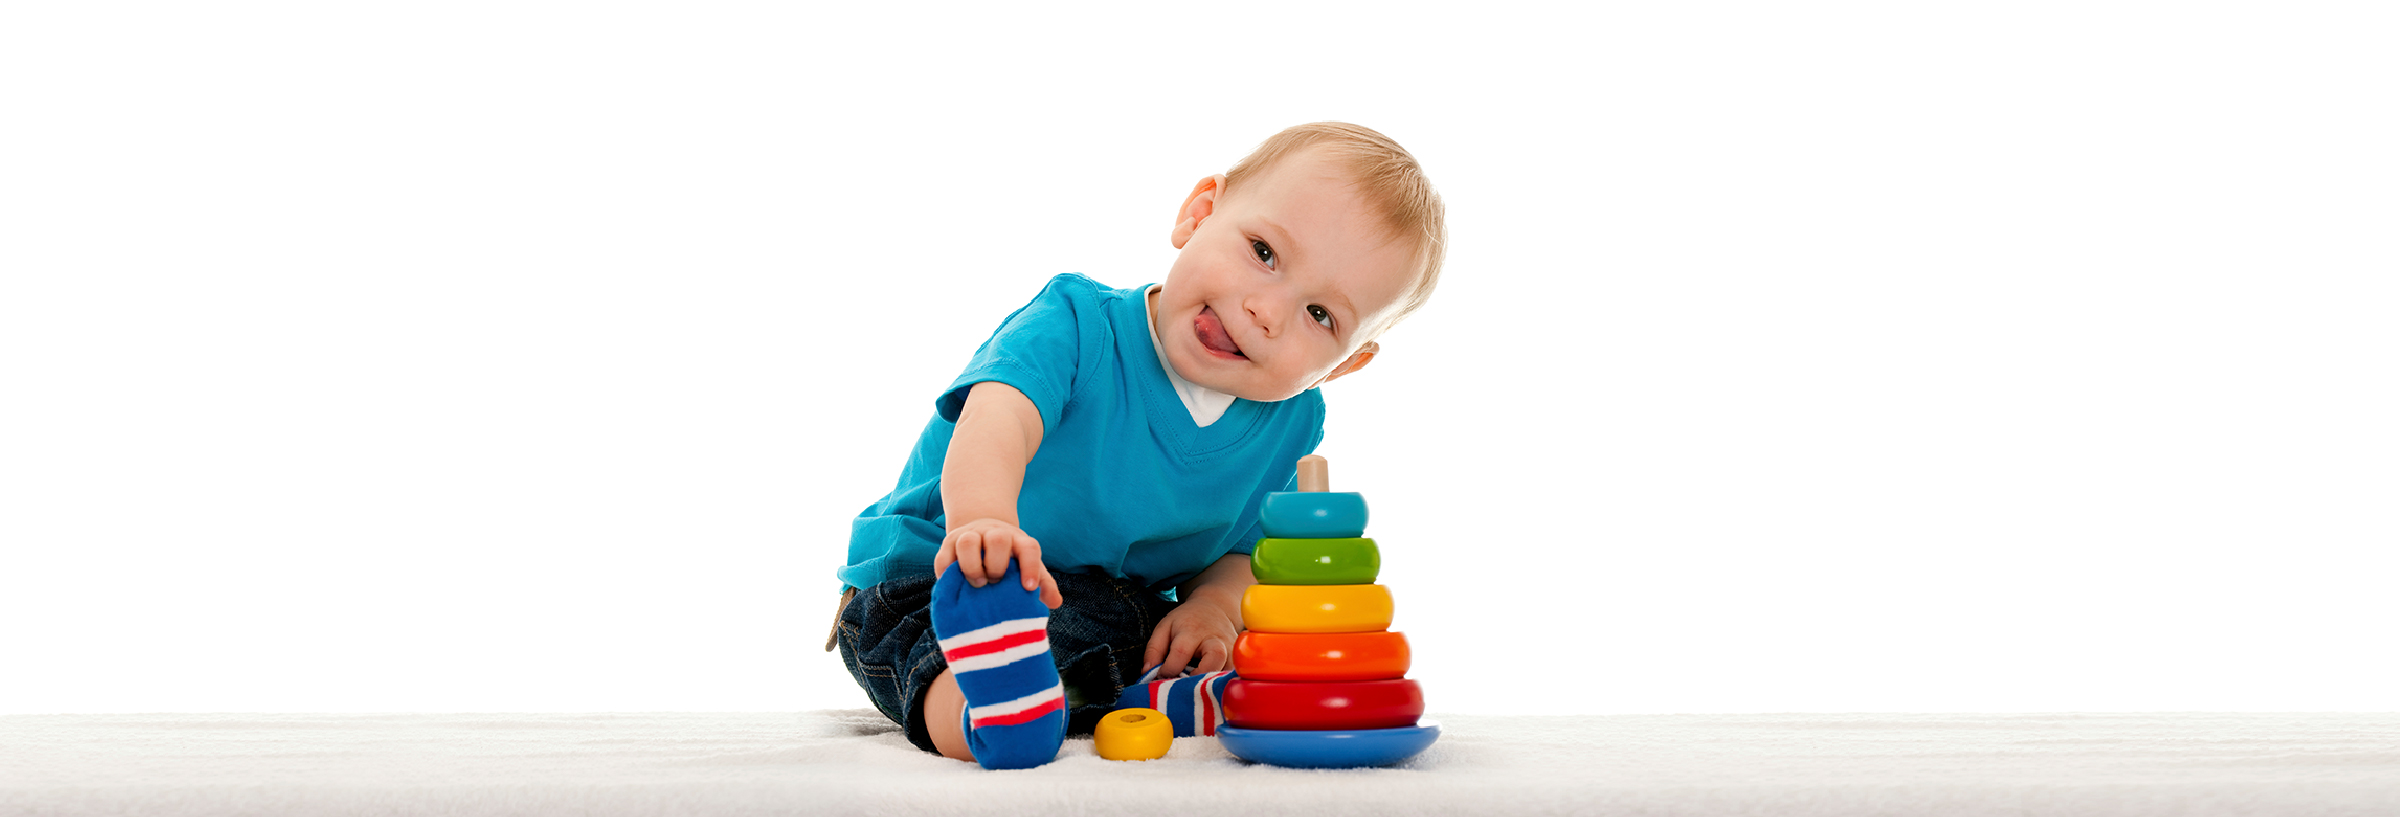 baby boy plying with toyes